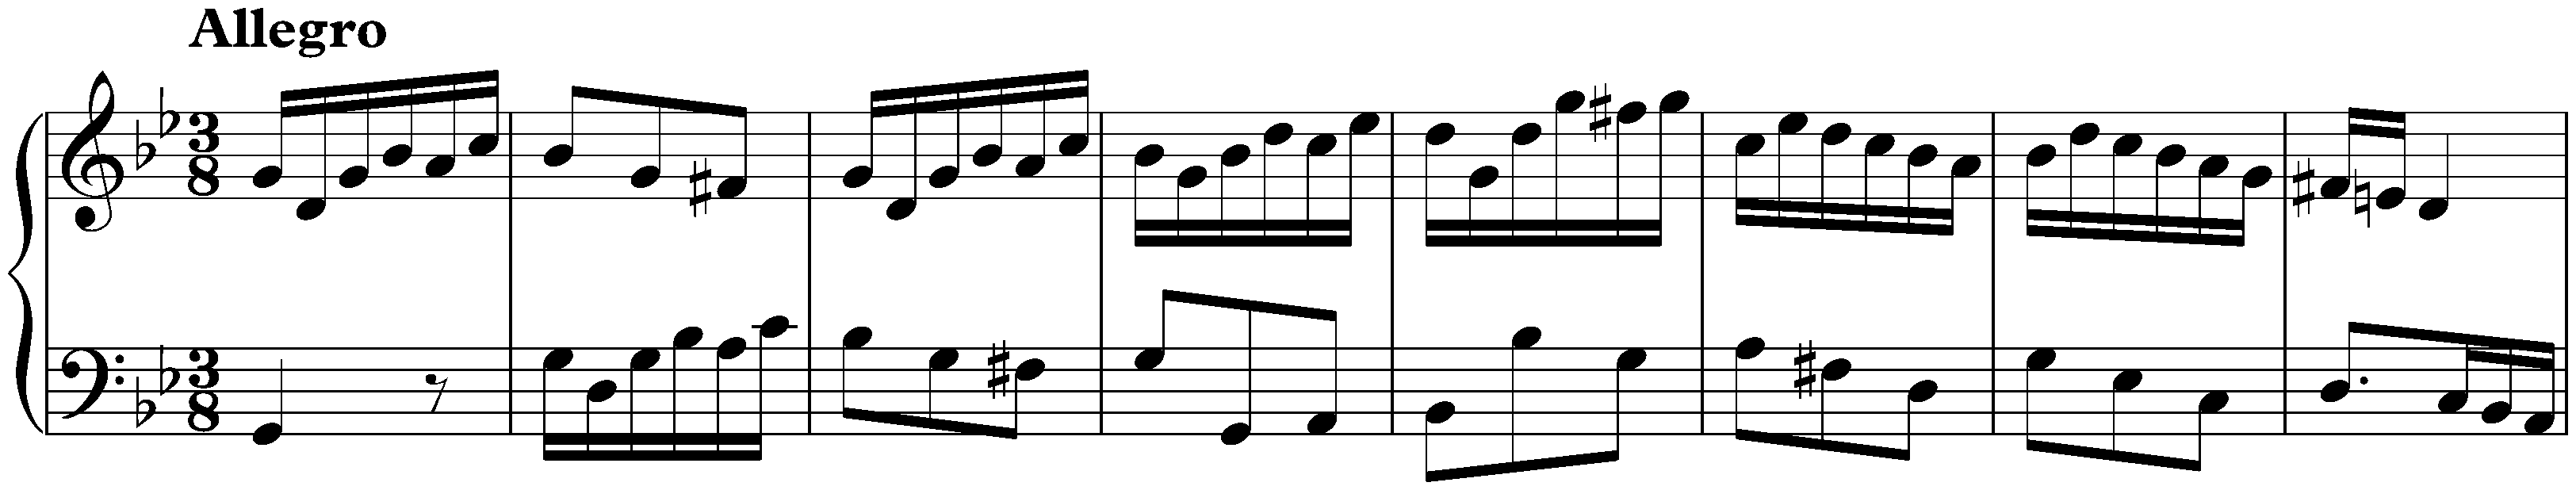 Suite in G minor, HWV 432; 3. Allegro